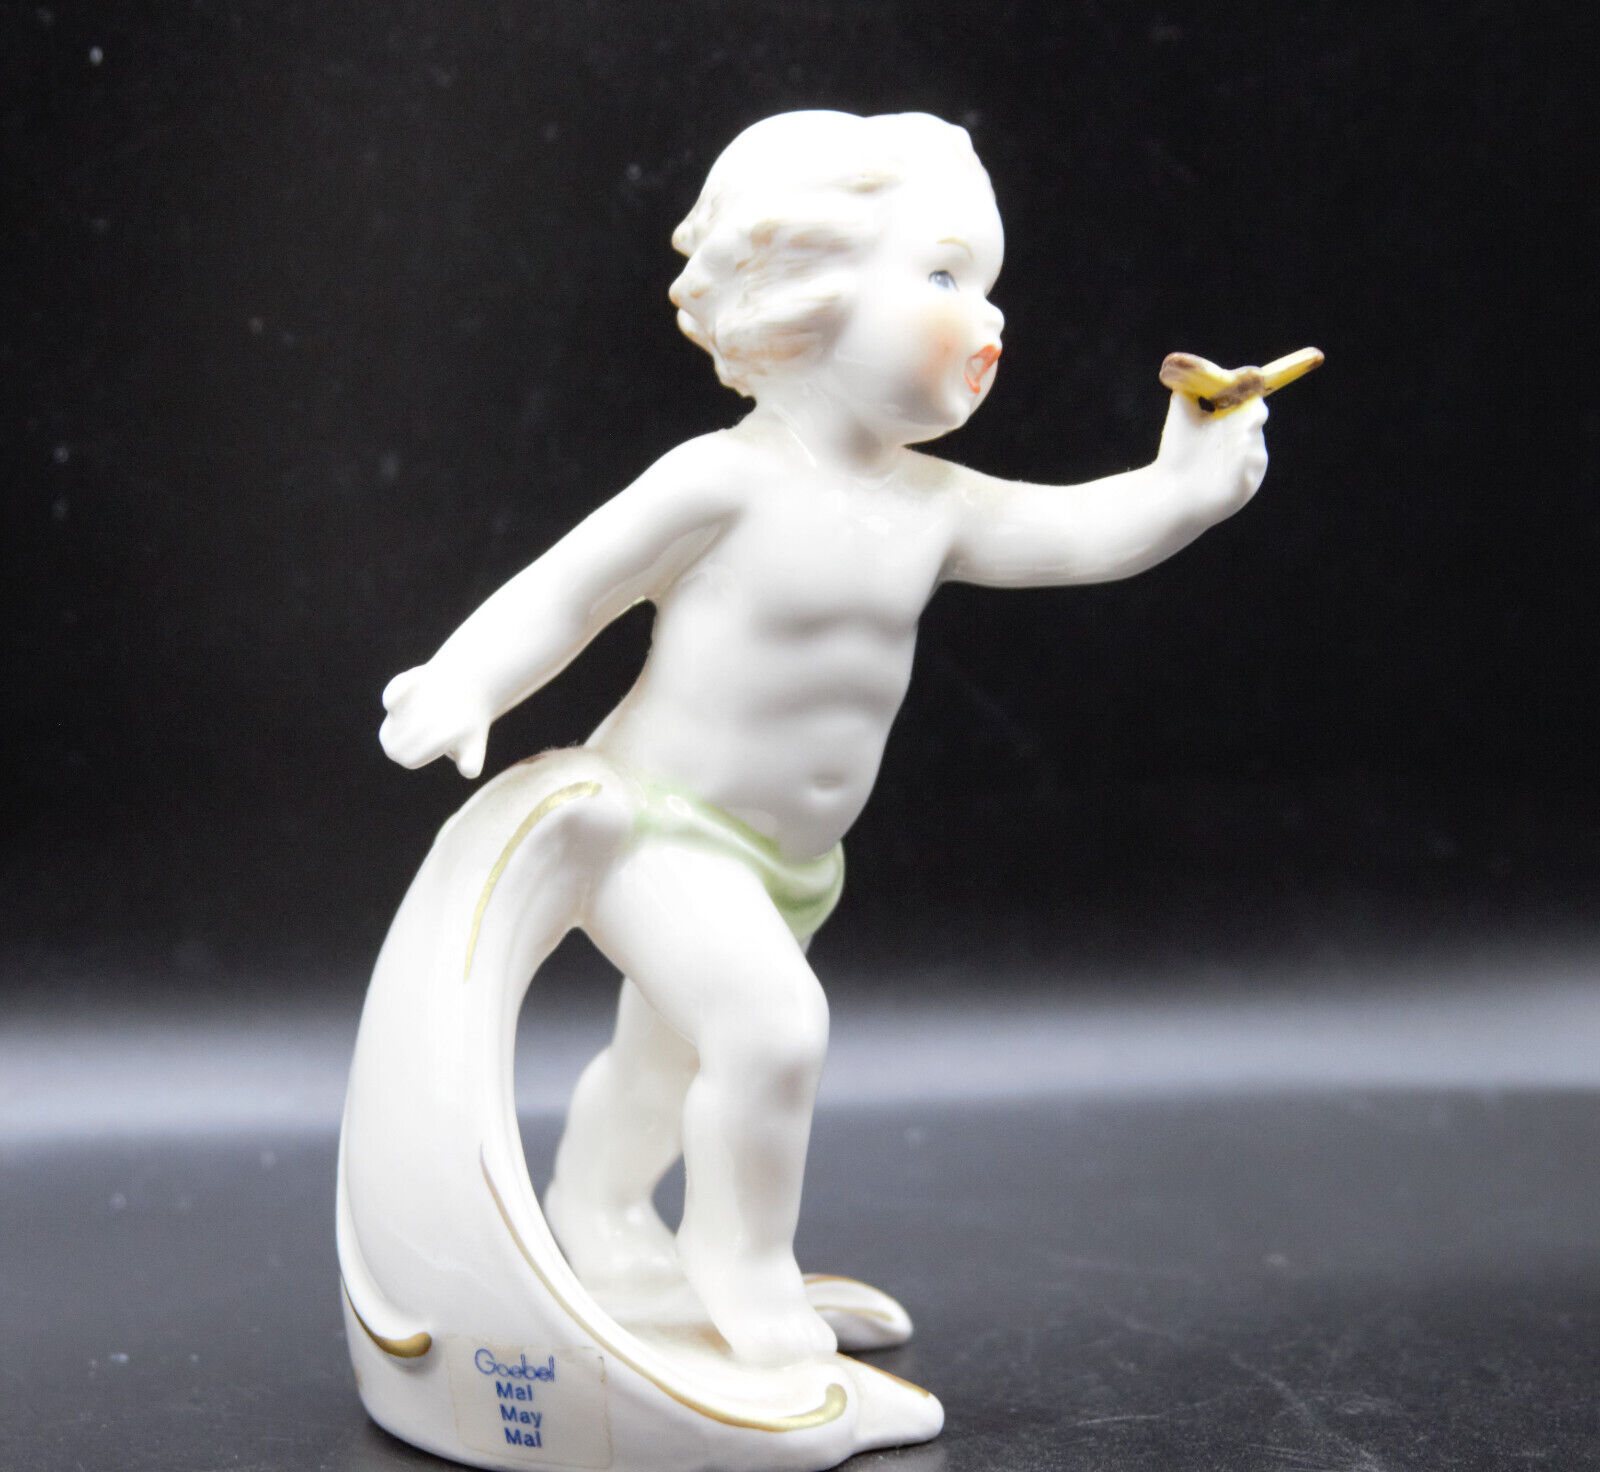 Vintage Goebel May Mai Cherub Putti Porcelain Figurine W. Germany